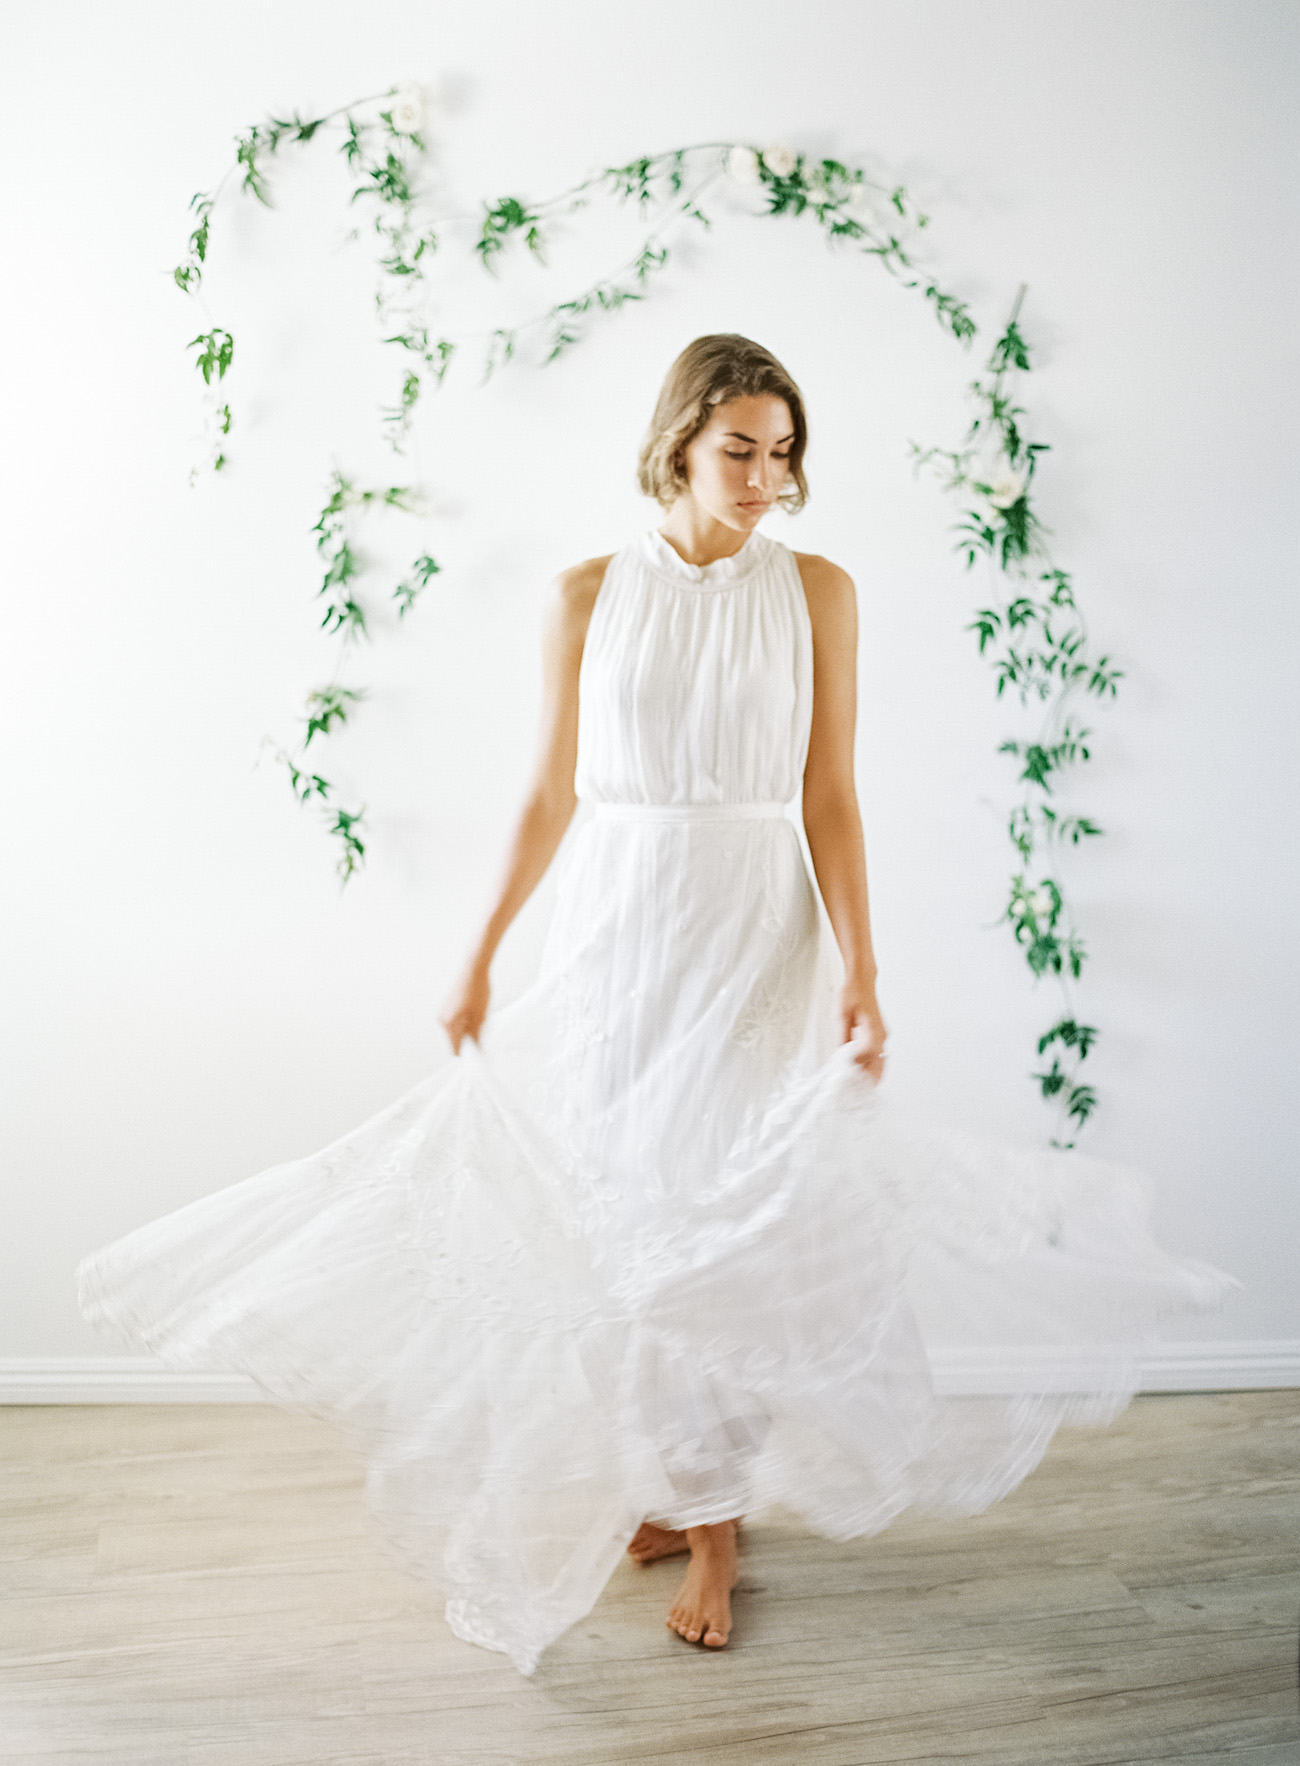 Tambour lace wedding dress